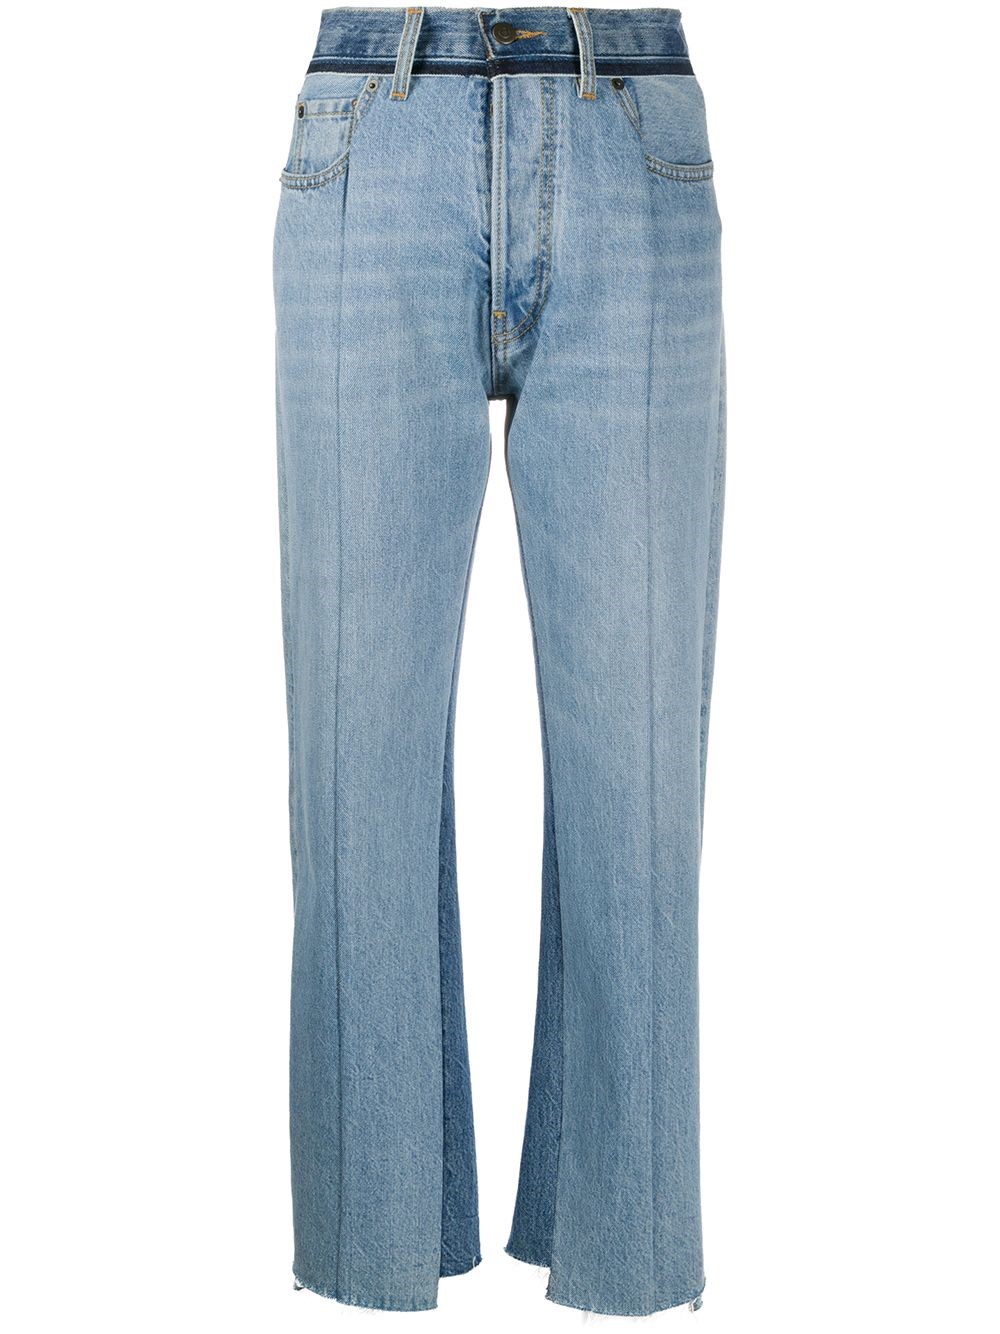 margiela jeans